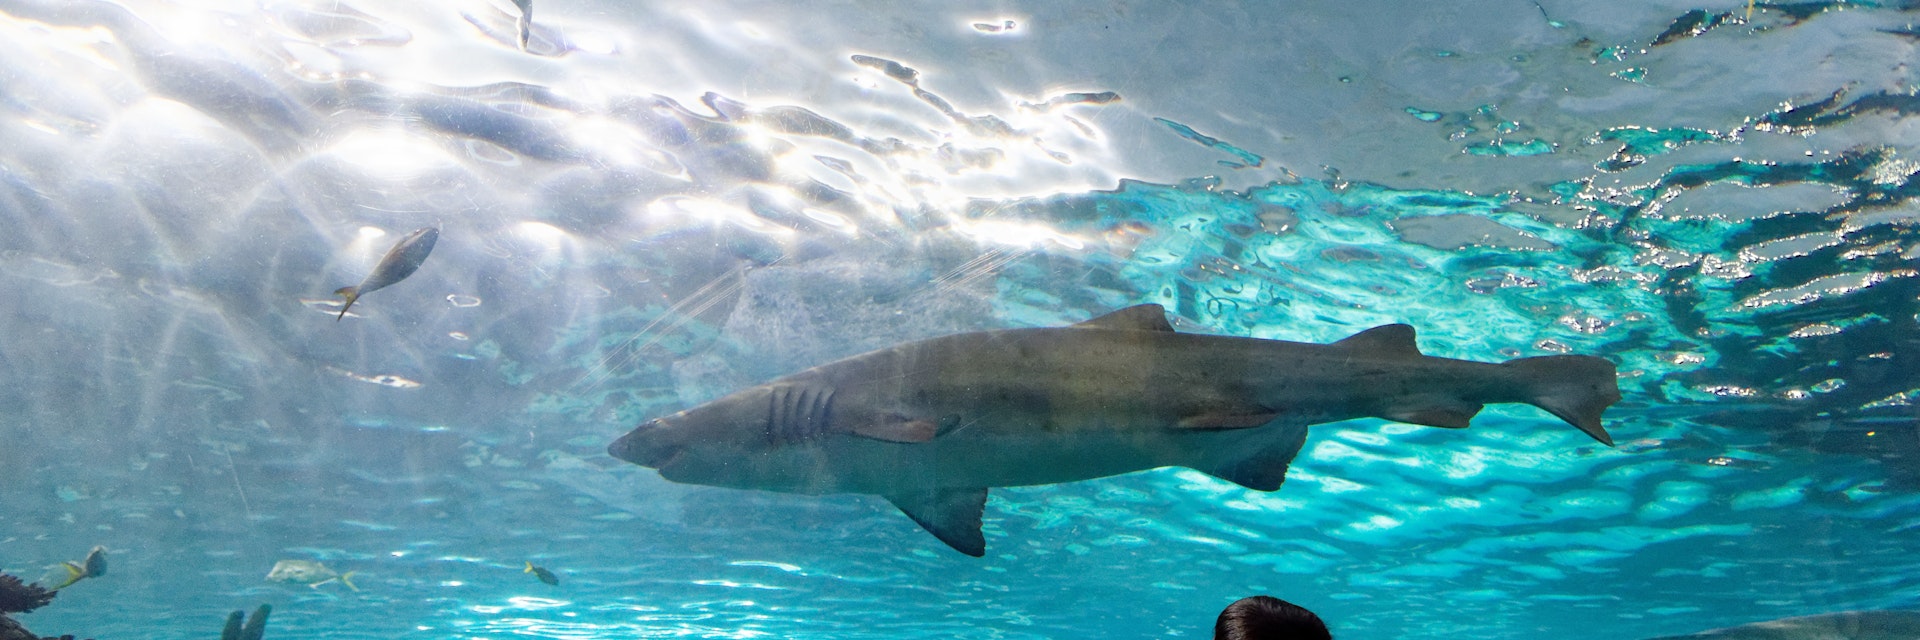 NOVEMBER 15, 2018: A man holds his son up to see the sand tiger shark inside Ripley's Aquarium of Canada.
1347903638
aquarium, blue-nurse sand tiger, boy, canada, carcharias taurus, dangerous lagoon, family, grey nurse shark, holds, inside, interior, man, ontario, ripleys, sand tiger shark, shark, son, spotted ragged-tooth shark, tank, toronto, tunnel